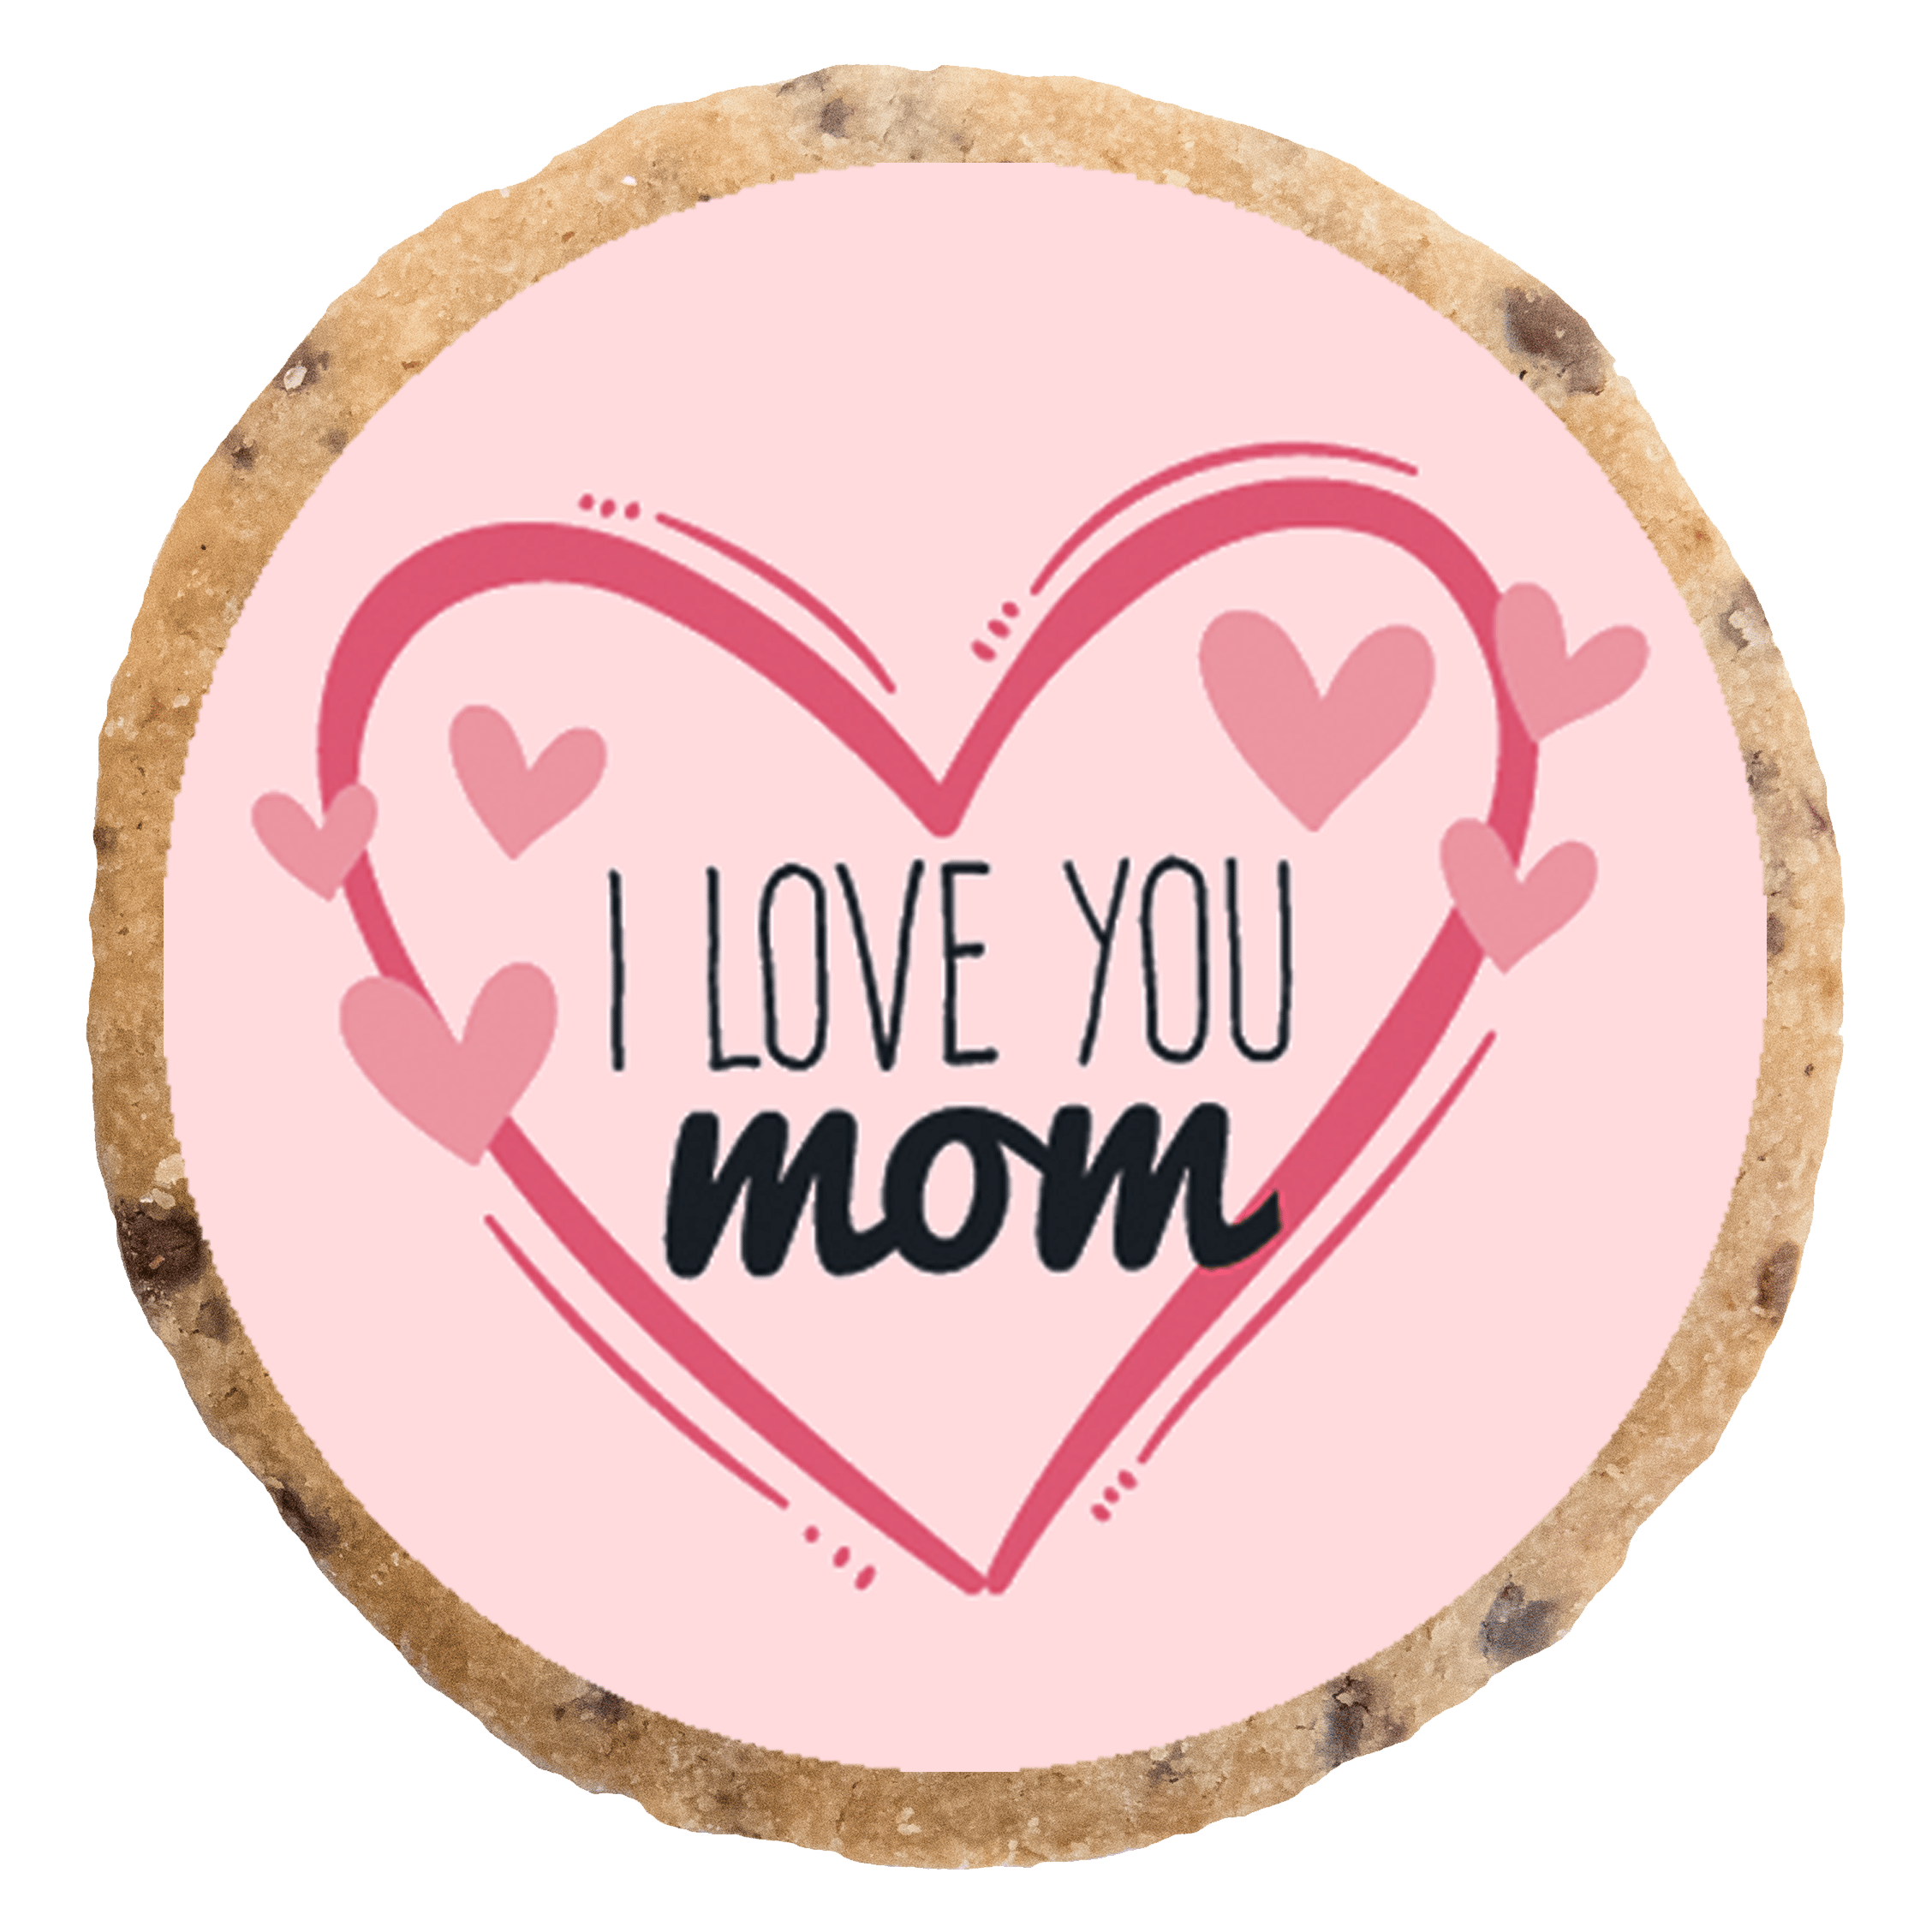 "I love you Mom" MotivKEKS